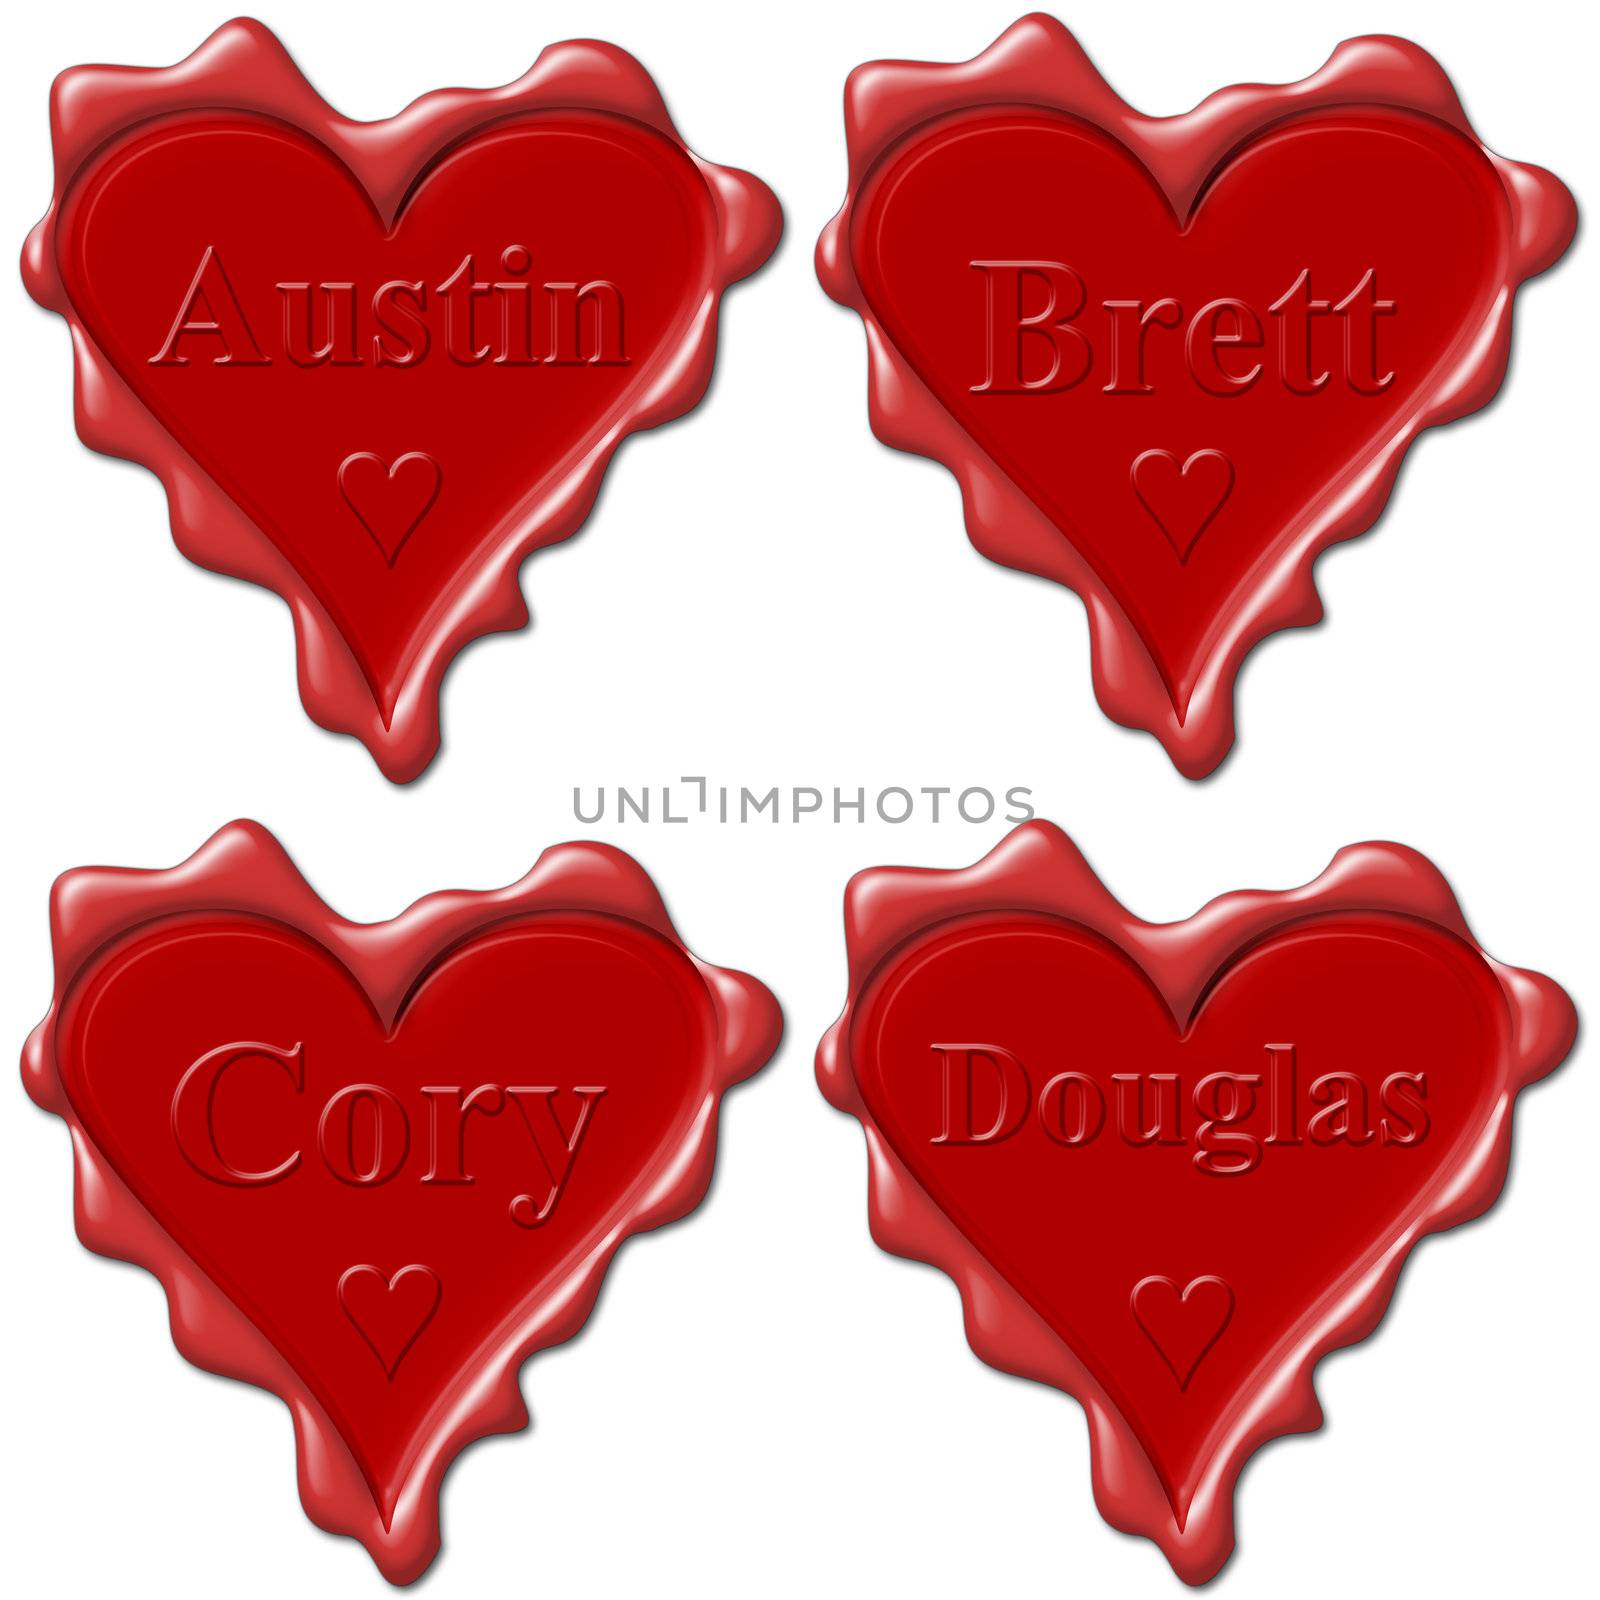 Valentine love hearts with names: Austin, Brett, Cory, Douglas by mozzyb